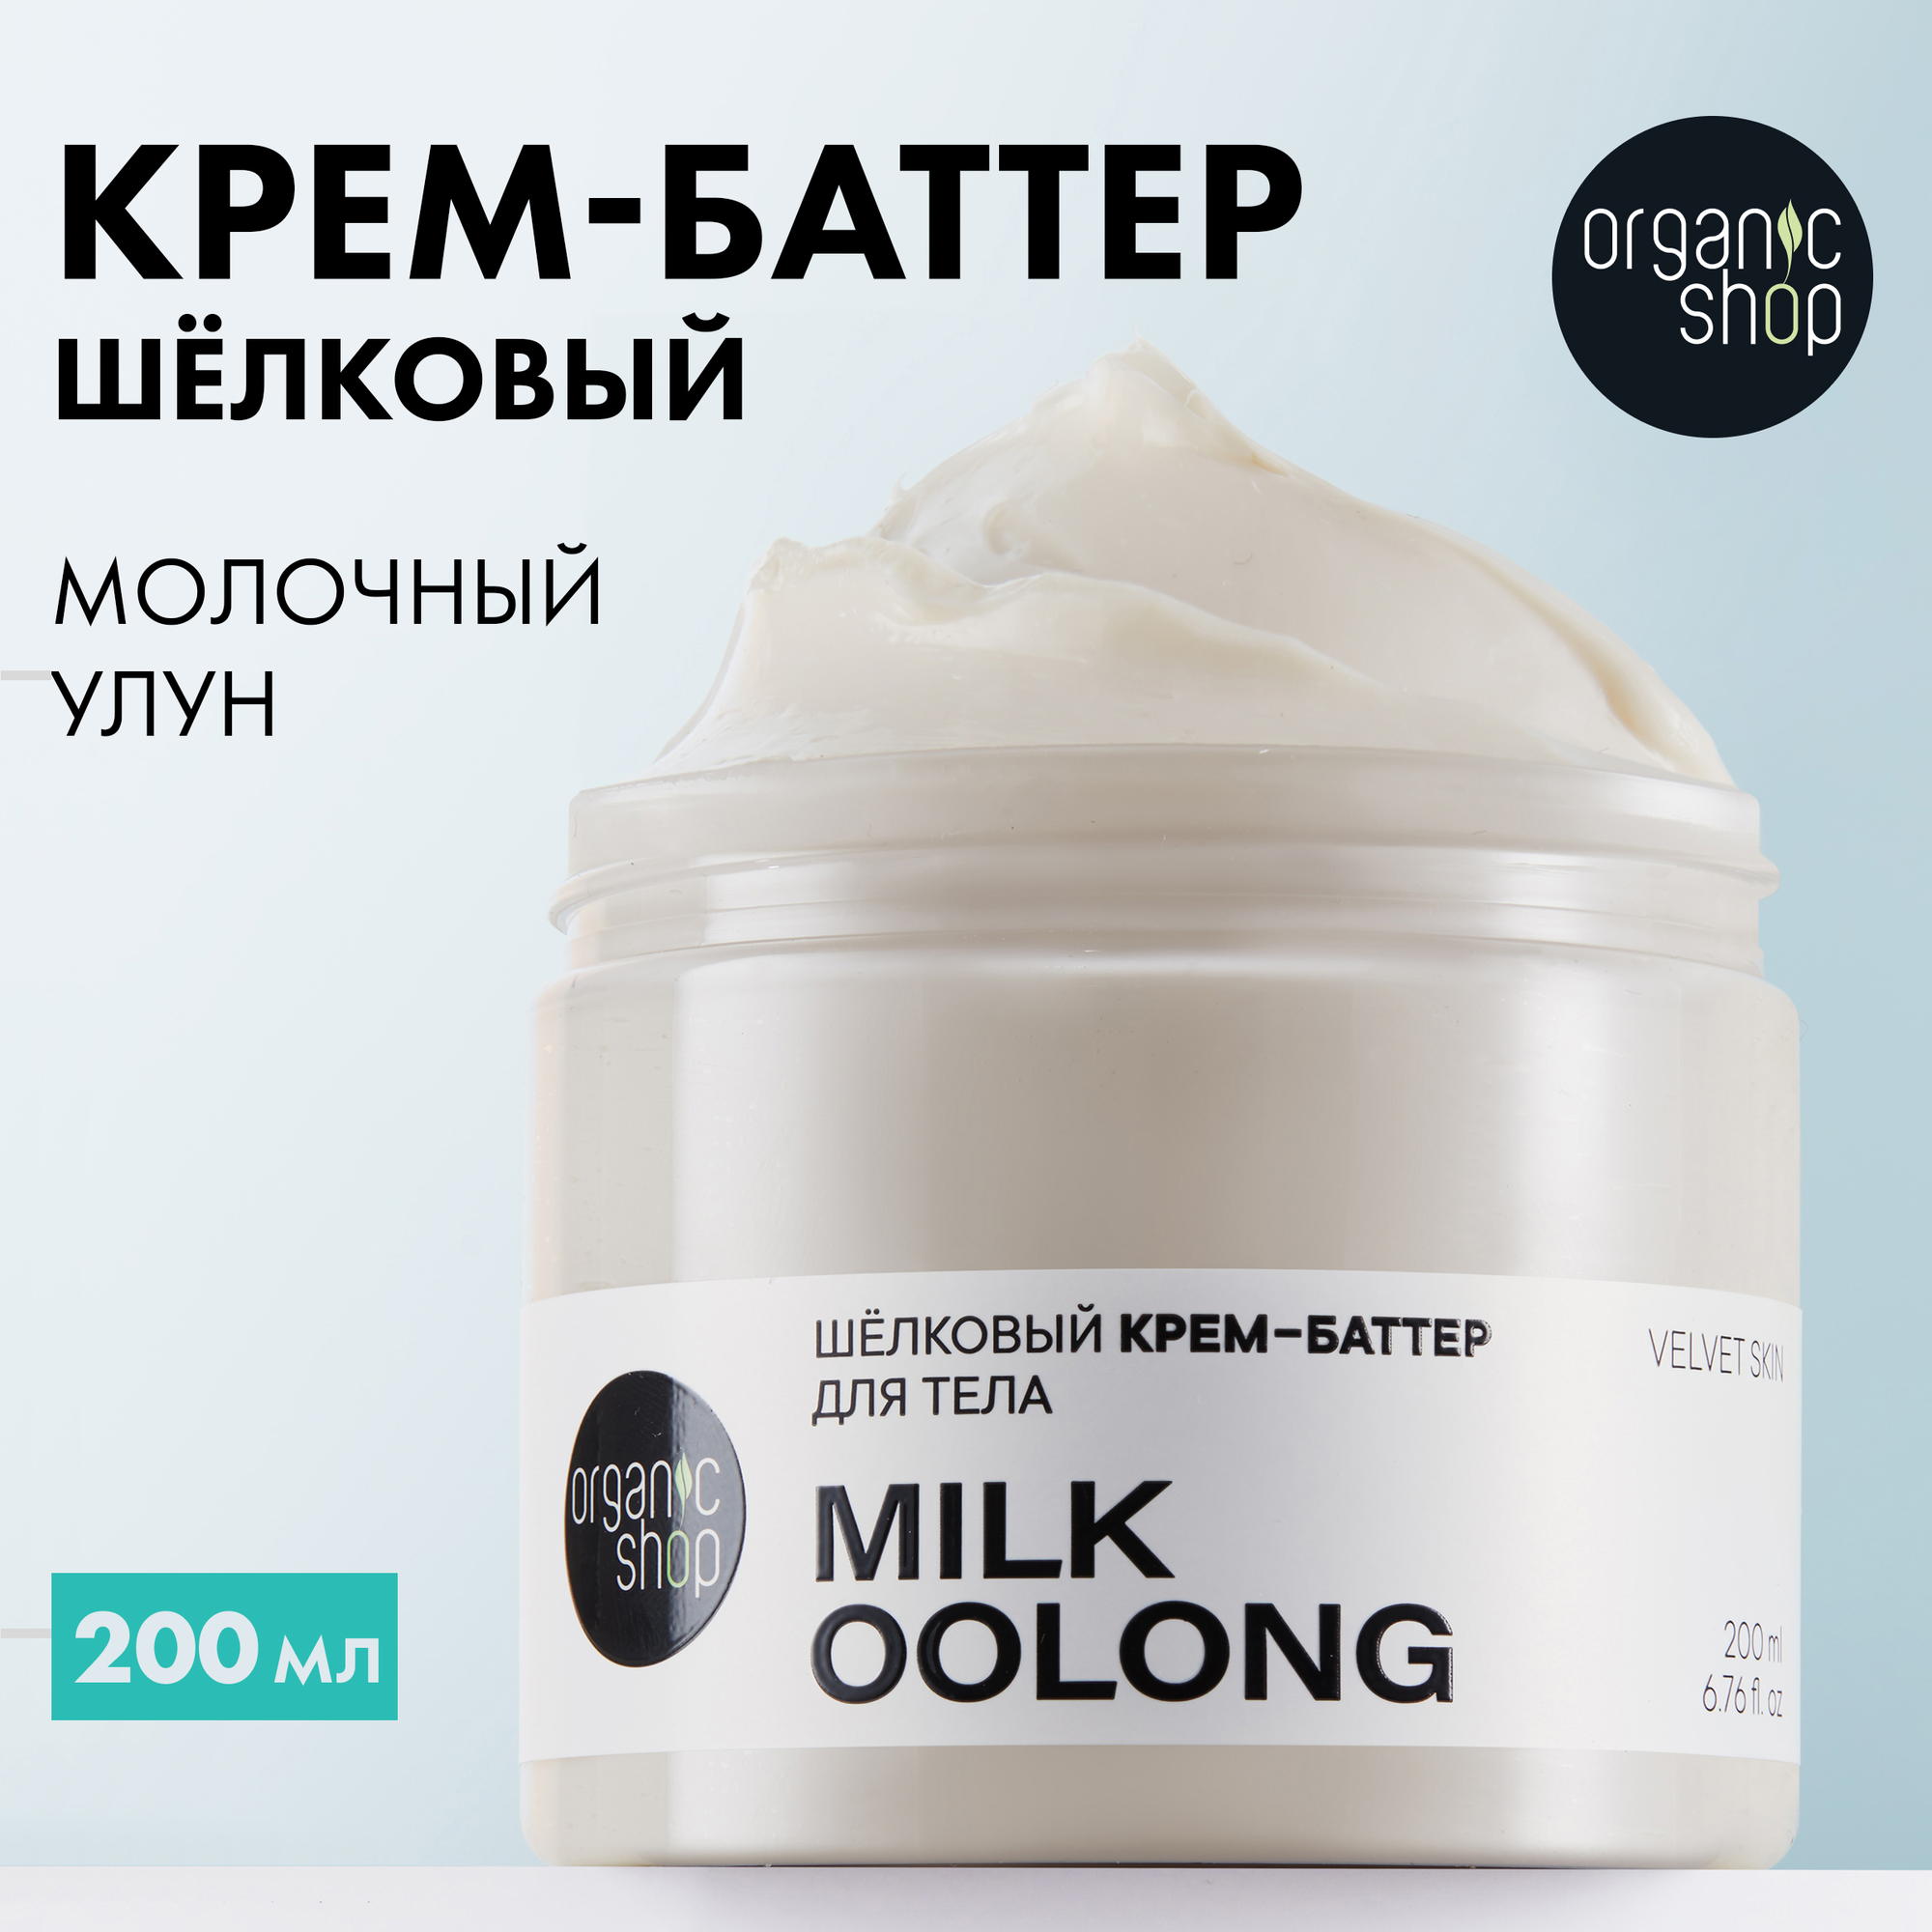 Шёлковый баттер Organic Shop для тела "Milk Oolong" 200мл